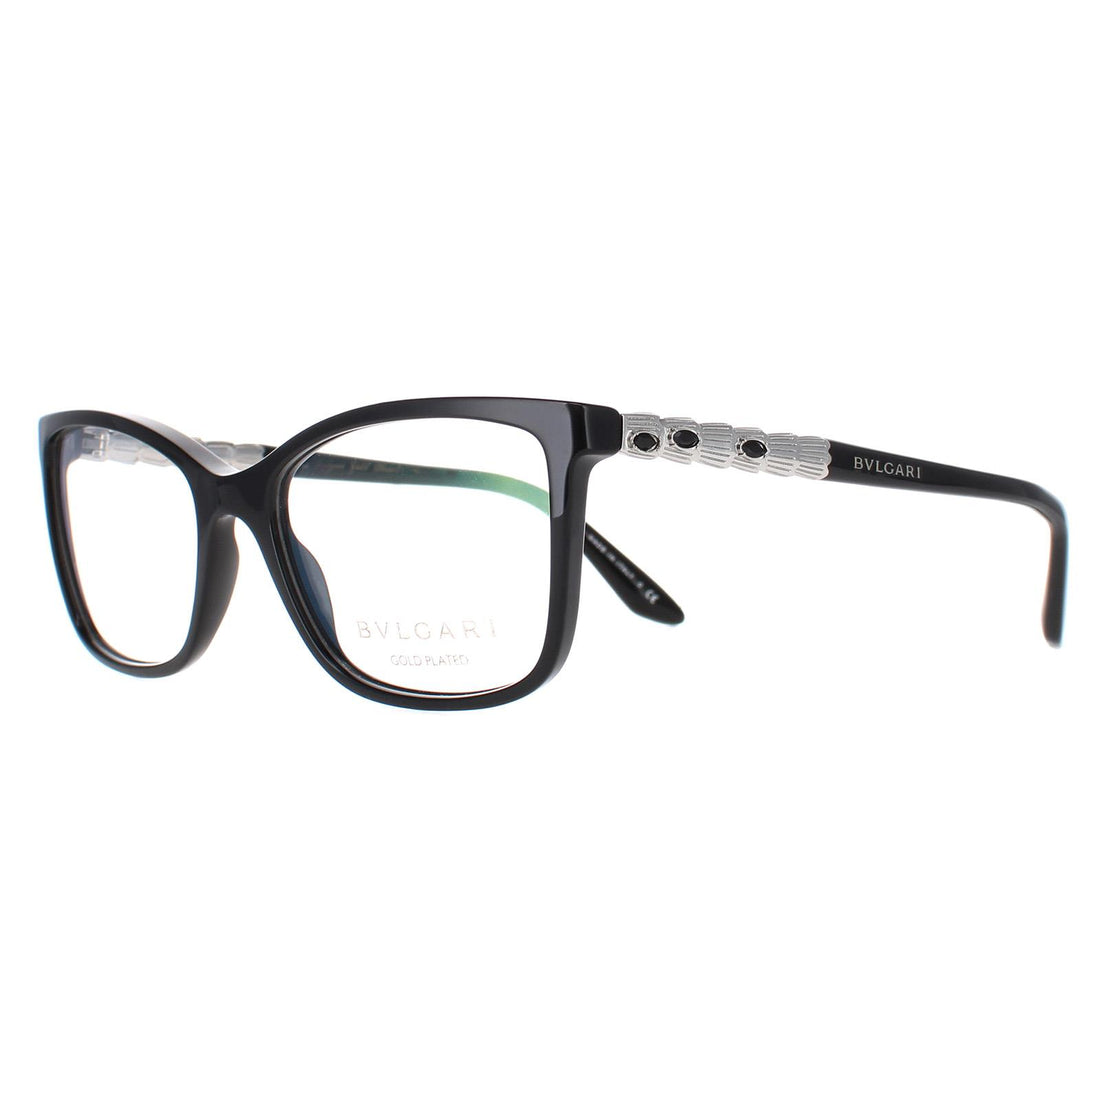 Bvlgari 4130KB Glasses Frames